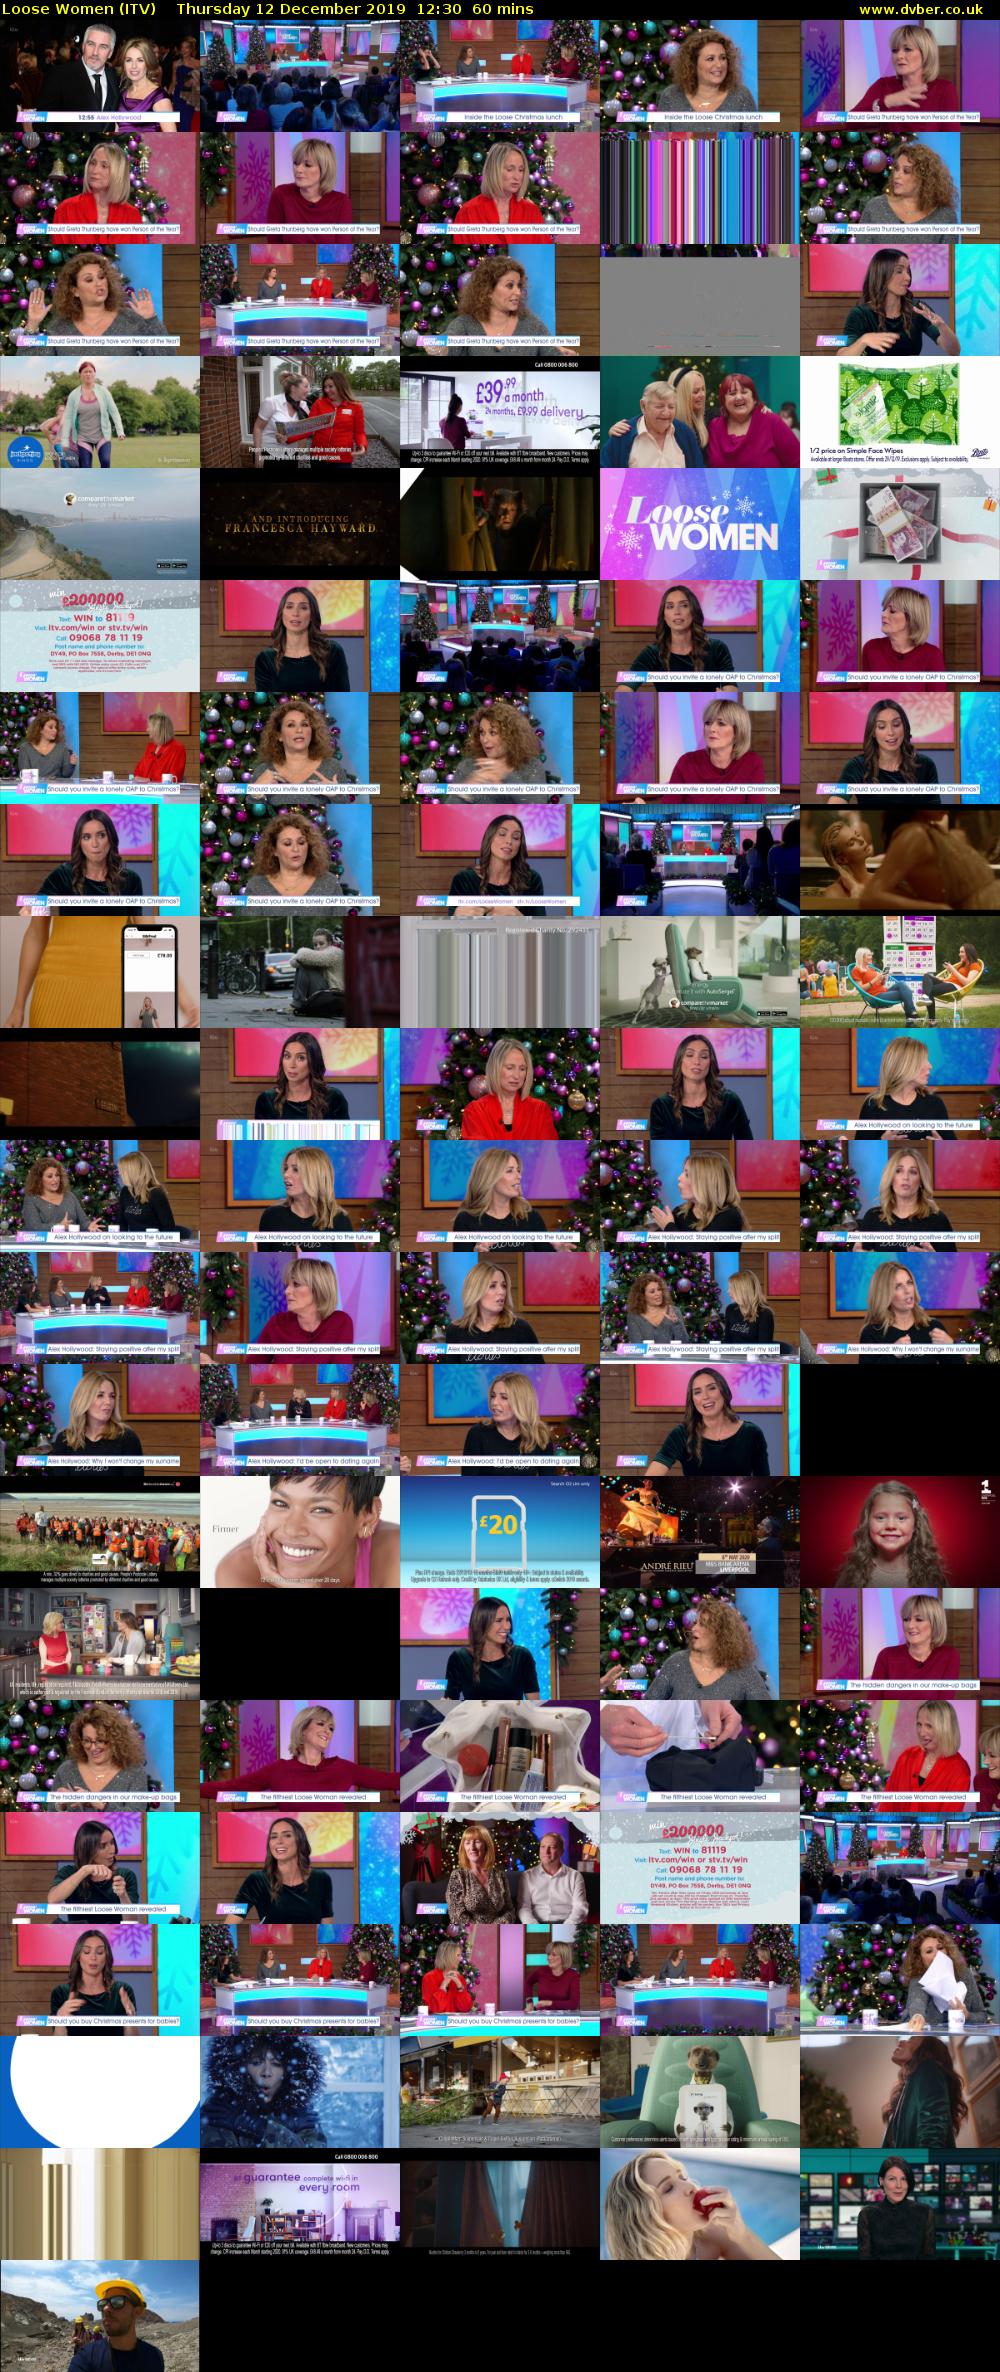 Loose Women (ITV) Thursday 12 December 2019 12:30 - 13:30